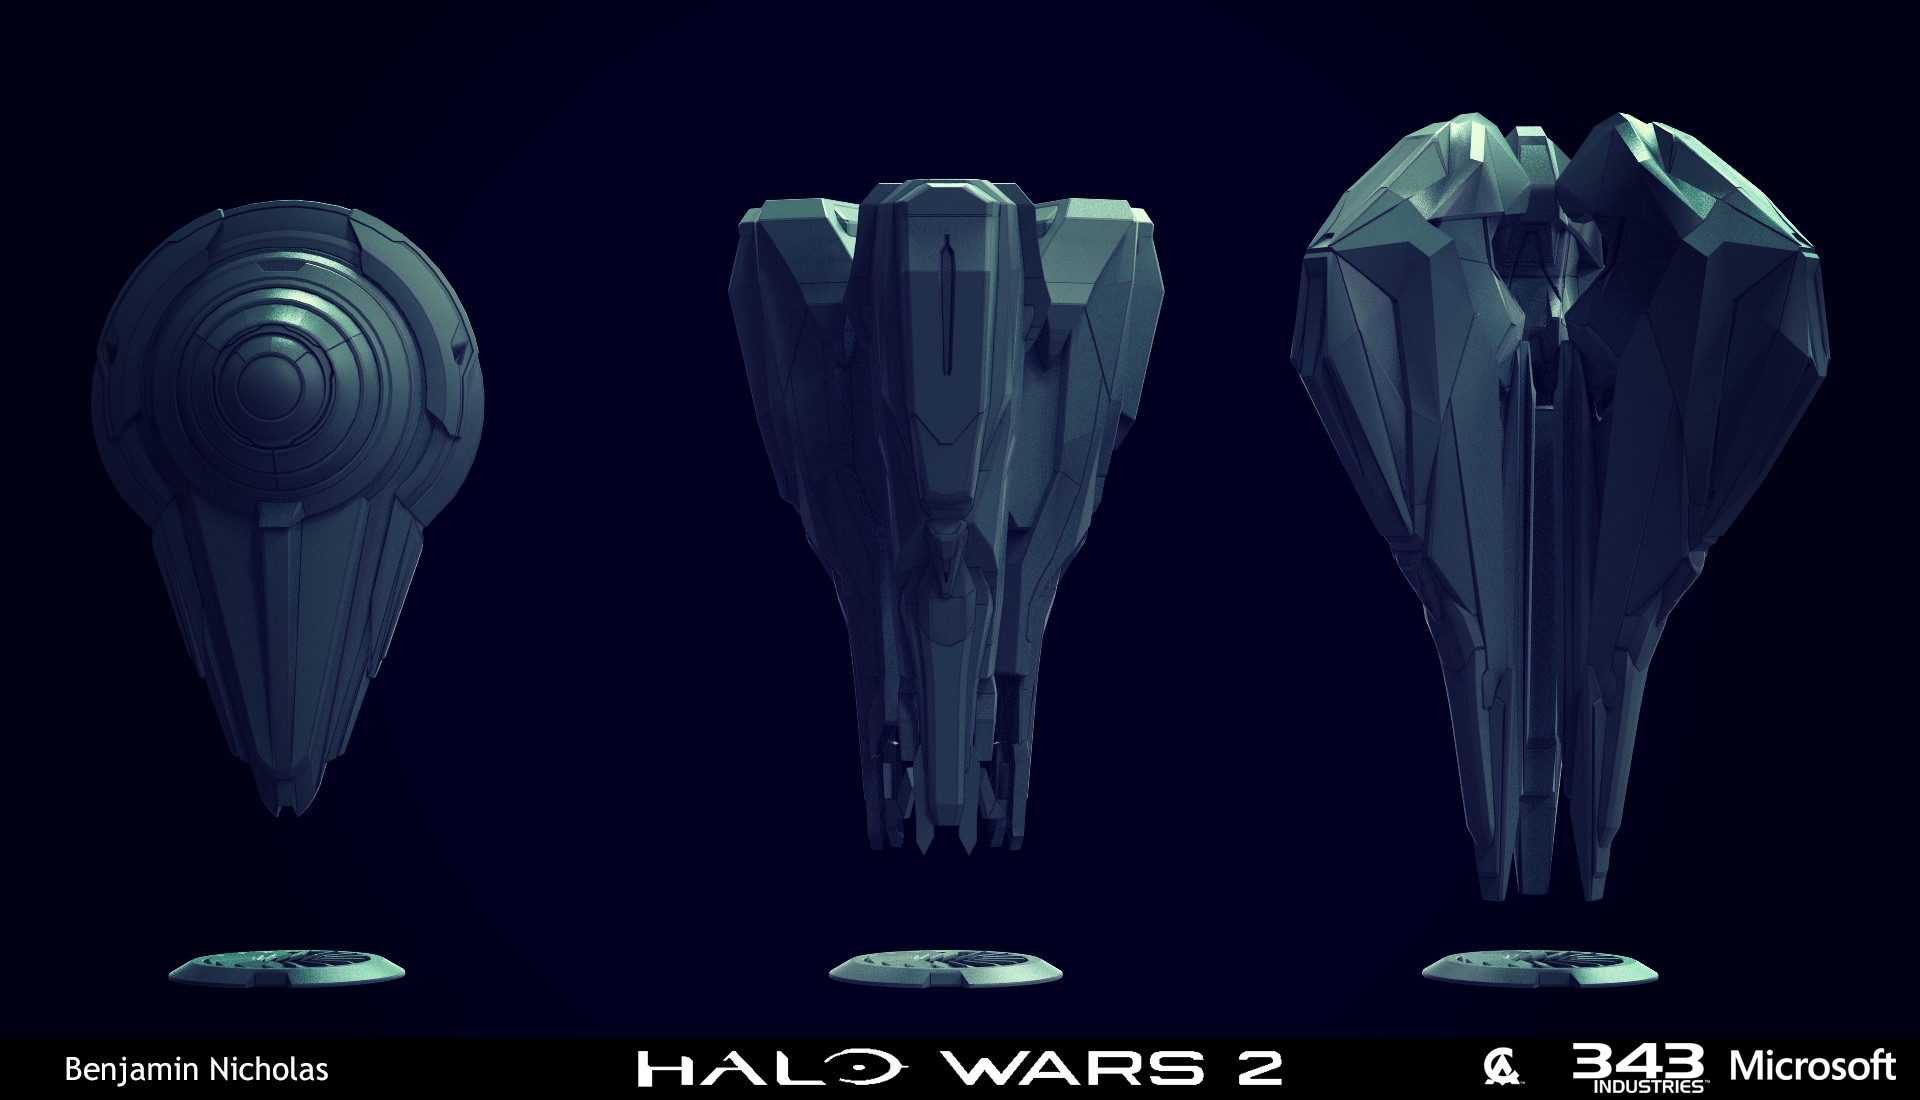 Belgian Boolean - Halo Wars 2 Capture Point and Light Bridge Concepts